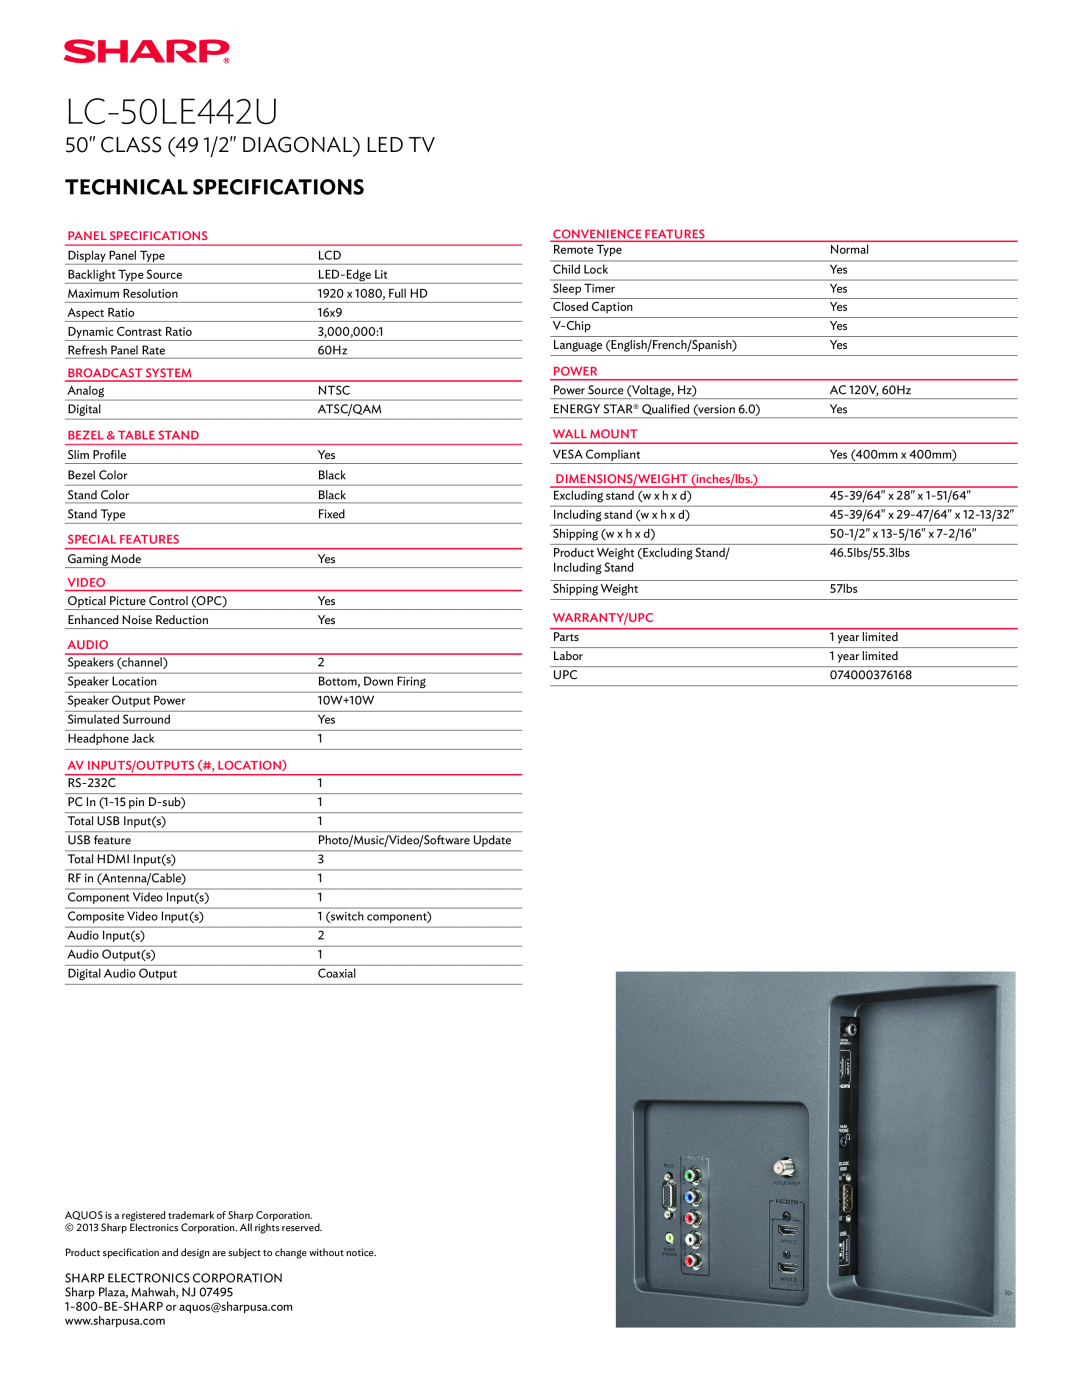 Sharp LC-50LE442U manual CLASS 49 1/2 DIAGONAL LED TV, Technical Specifications 